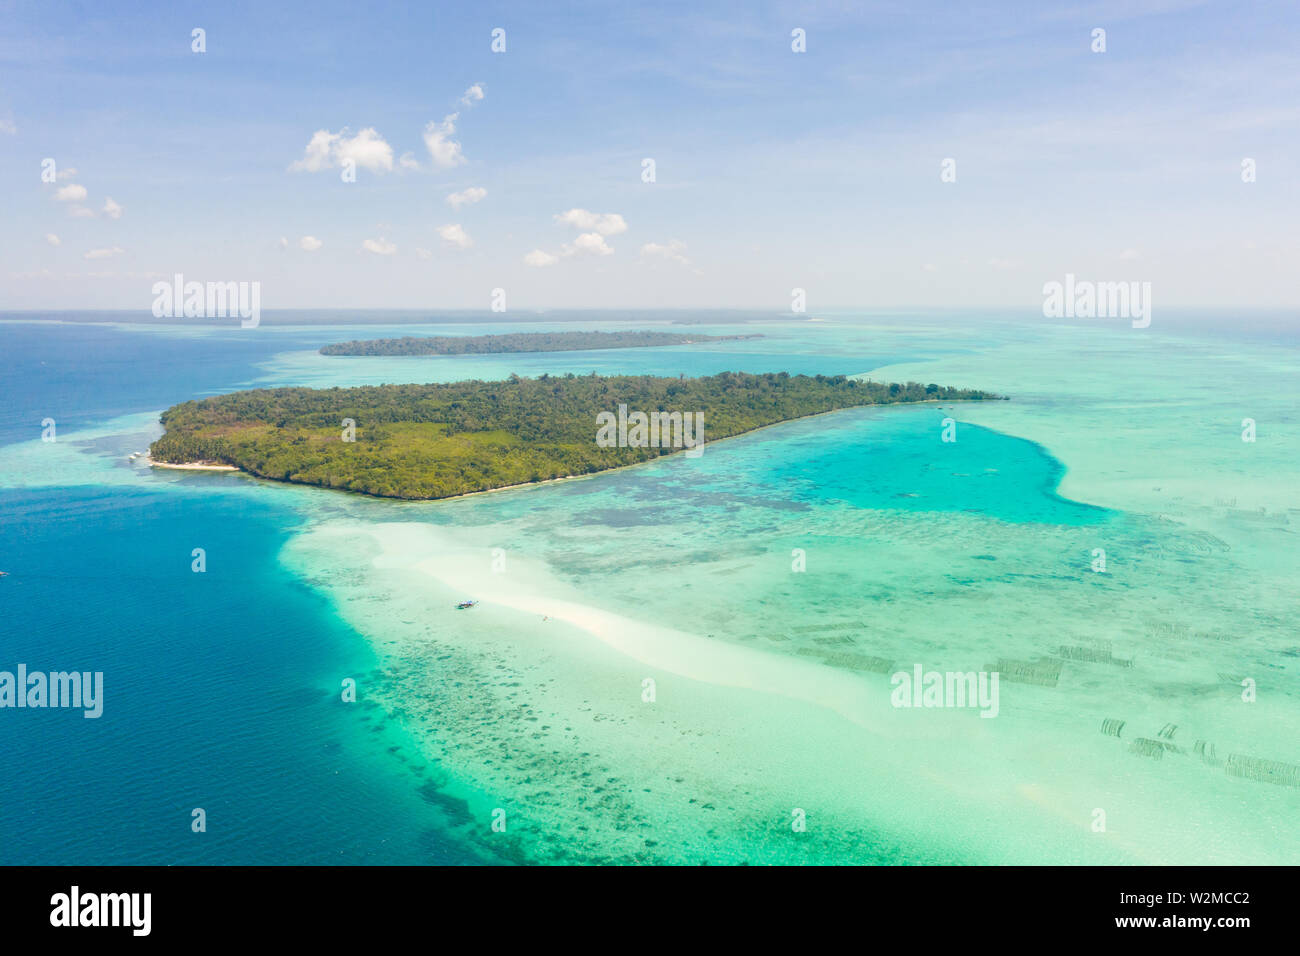 Mansalangan sandbar, Balabac, PALAWAN FILIPPINE. Isole tropicali con le lagune turchesi, vista da sopra. Seascape con atolli e isole. Foto Stock